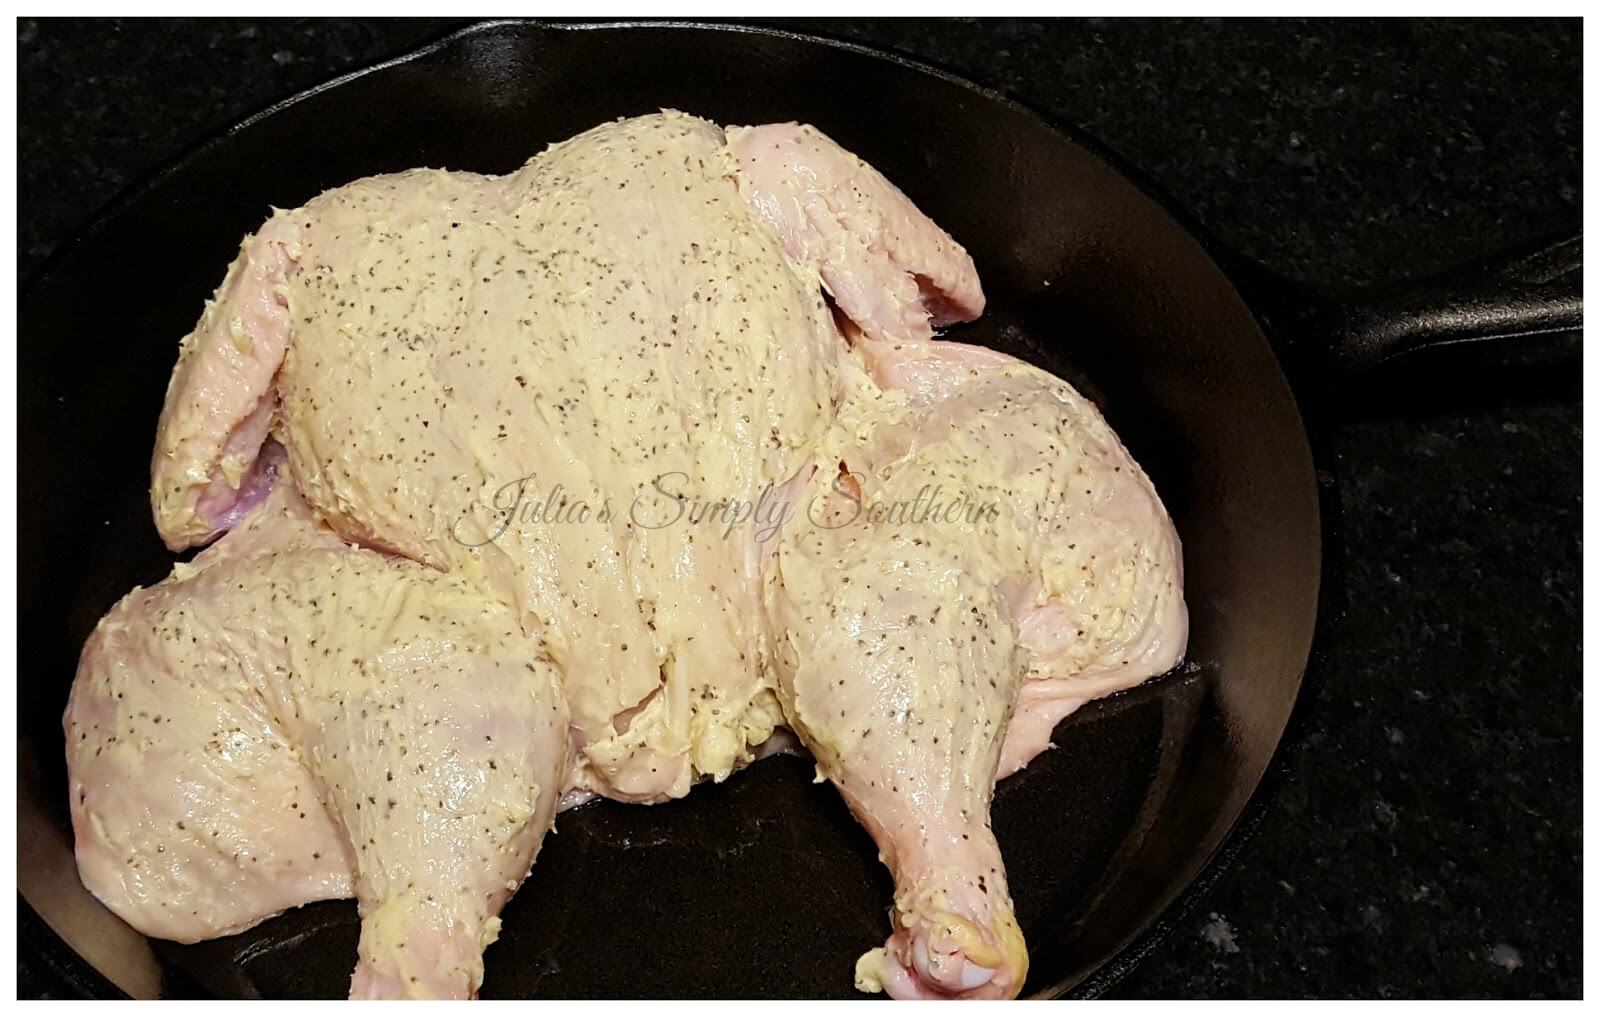 Preparing a spatchcock chicken